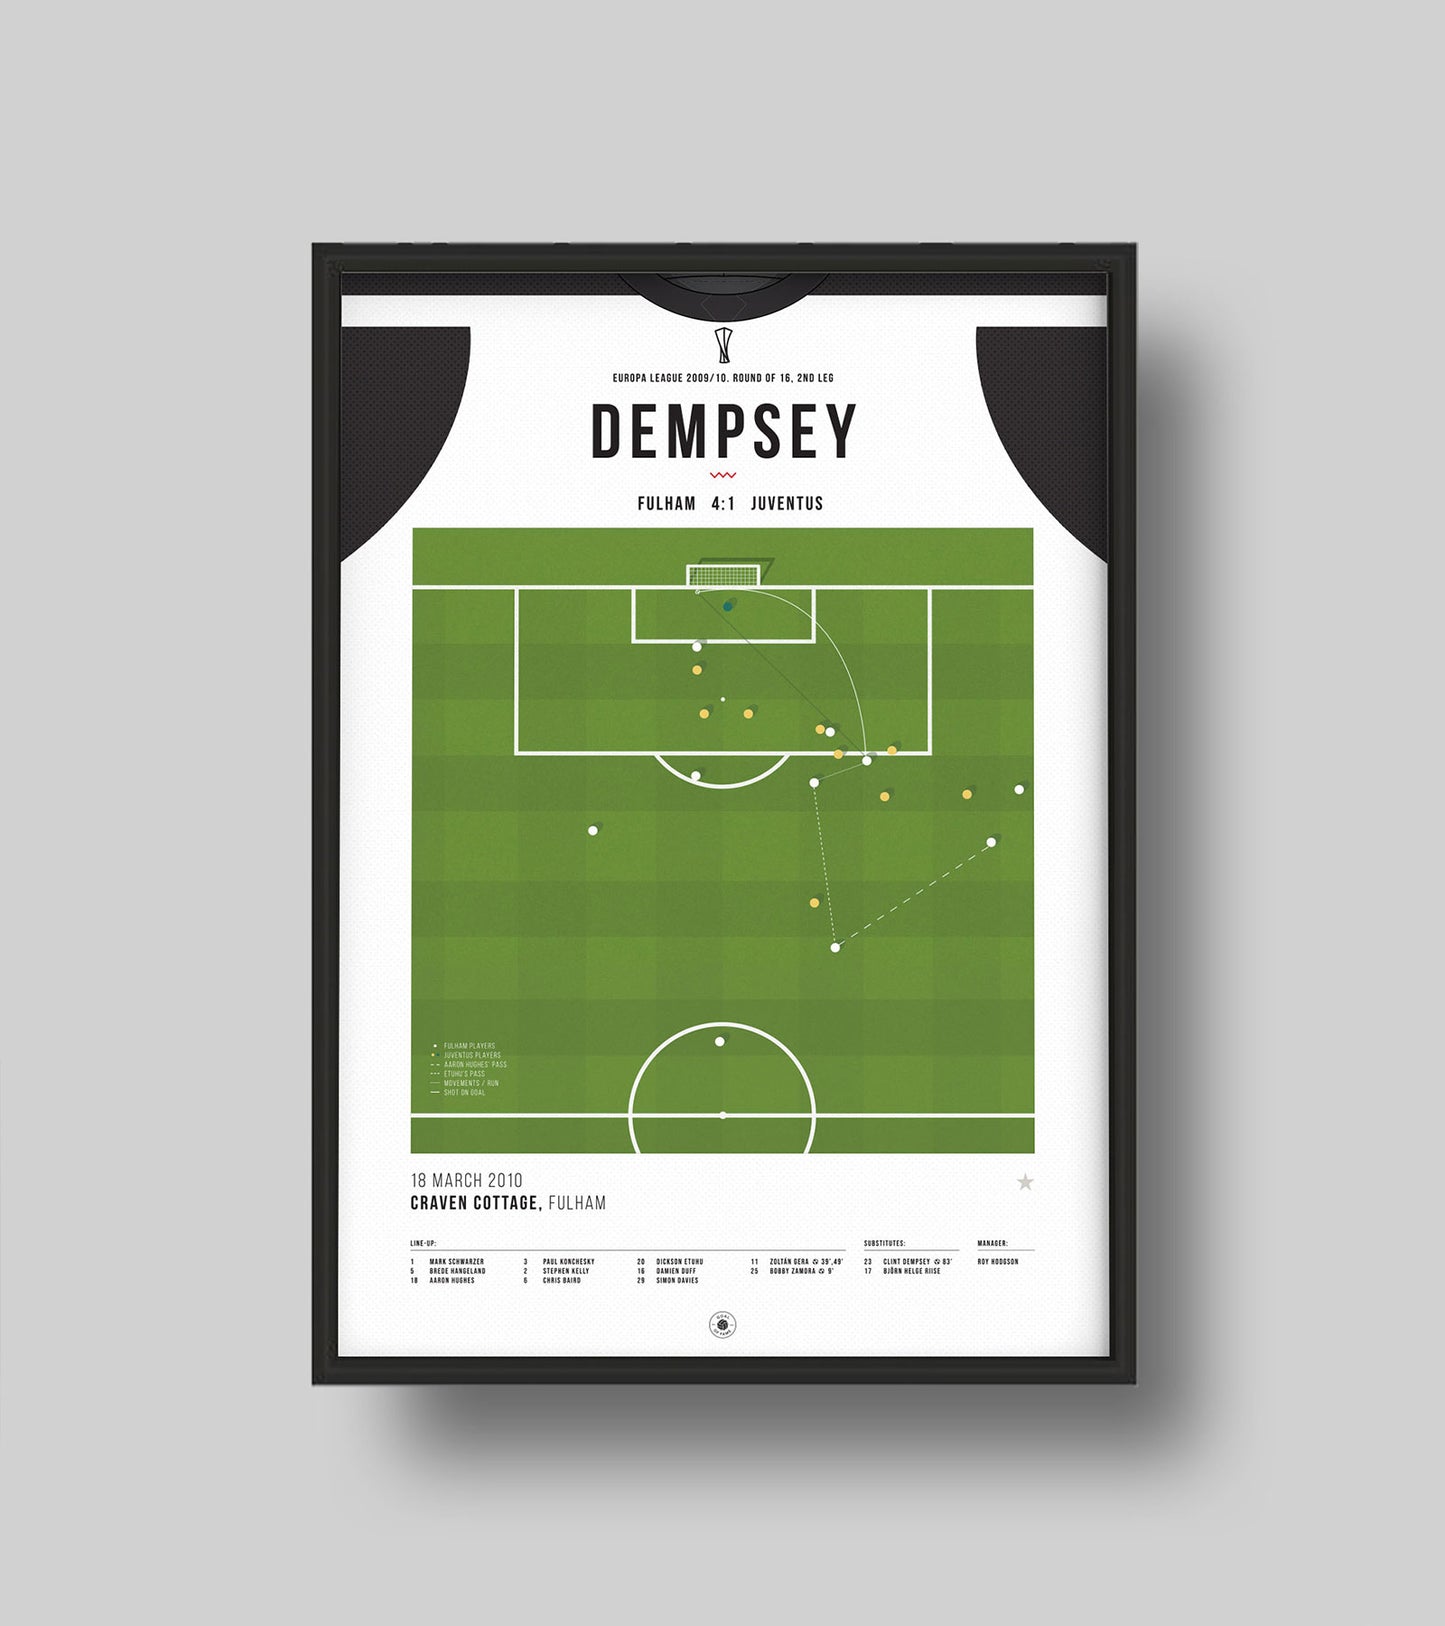 Clint Dempsey Goal vs Juventus